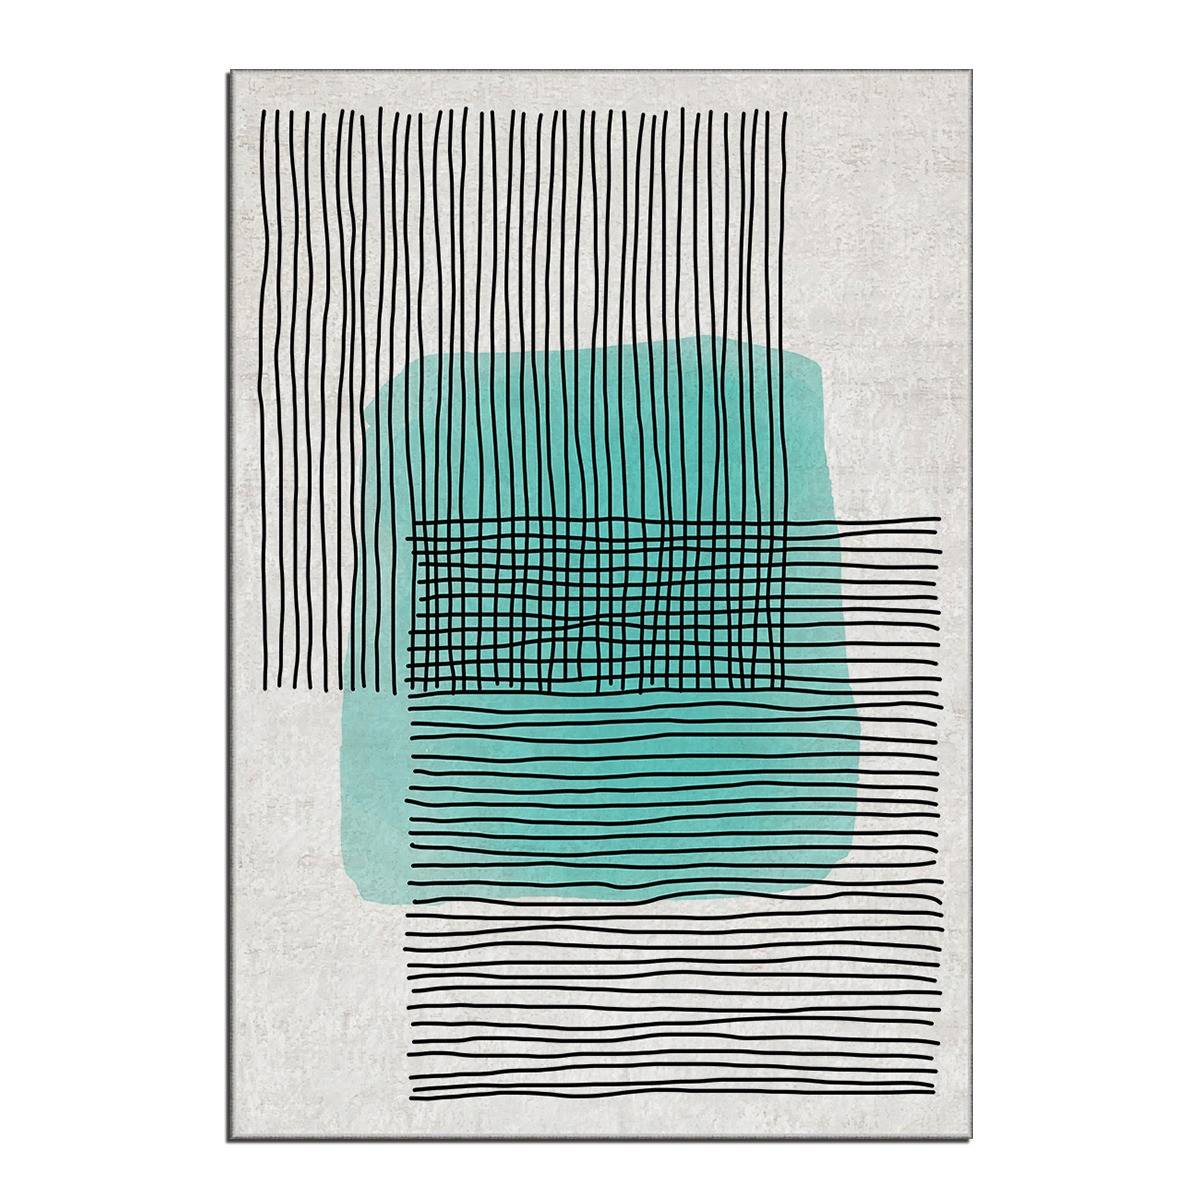 Eben Teppich 100x140cm Abstraktes Muster Linien Schwarz e Fleck Grün